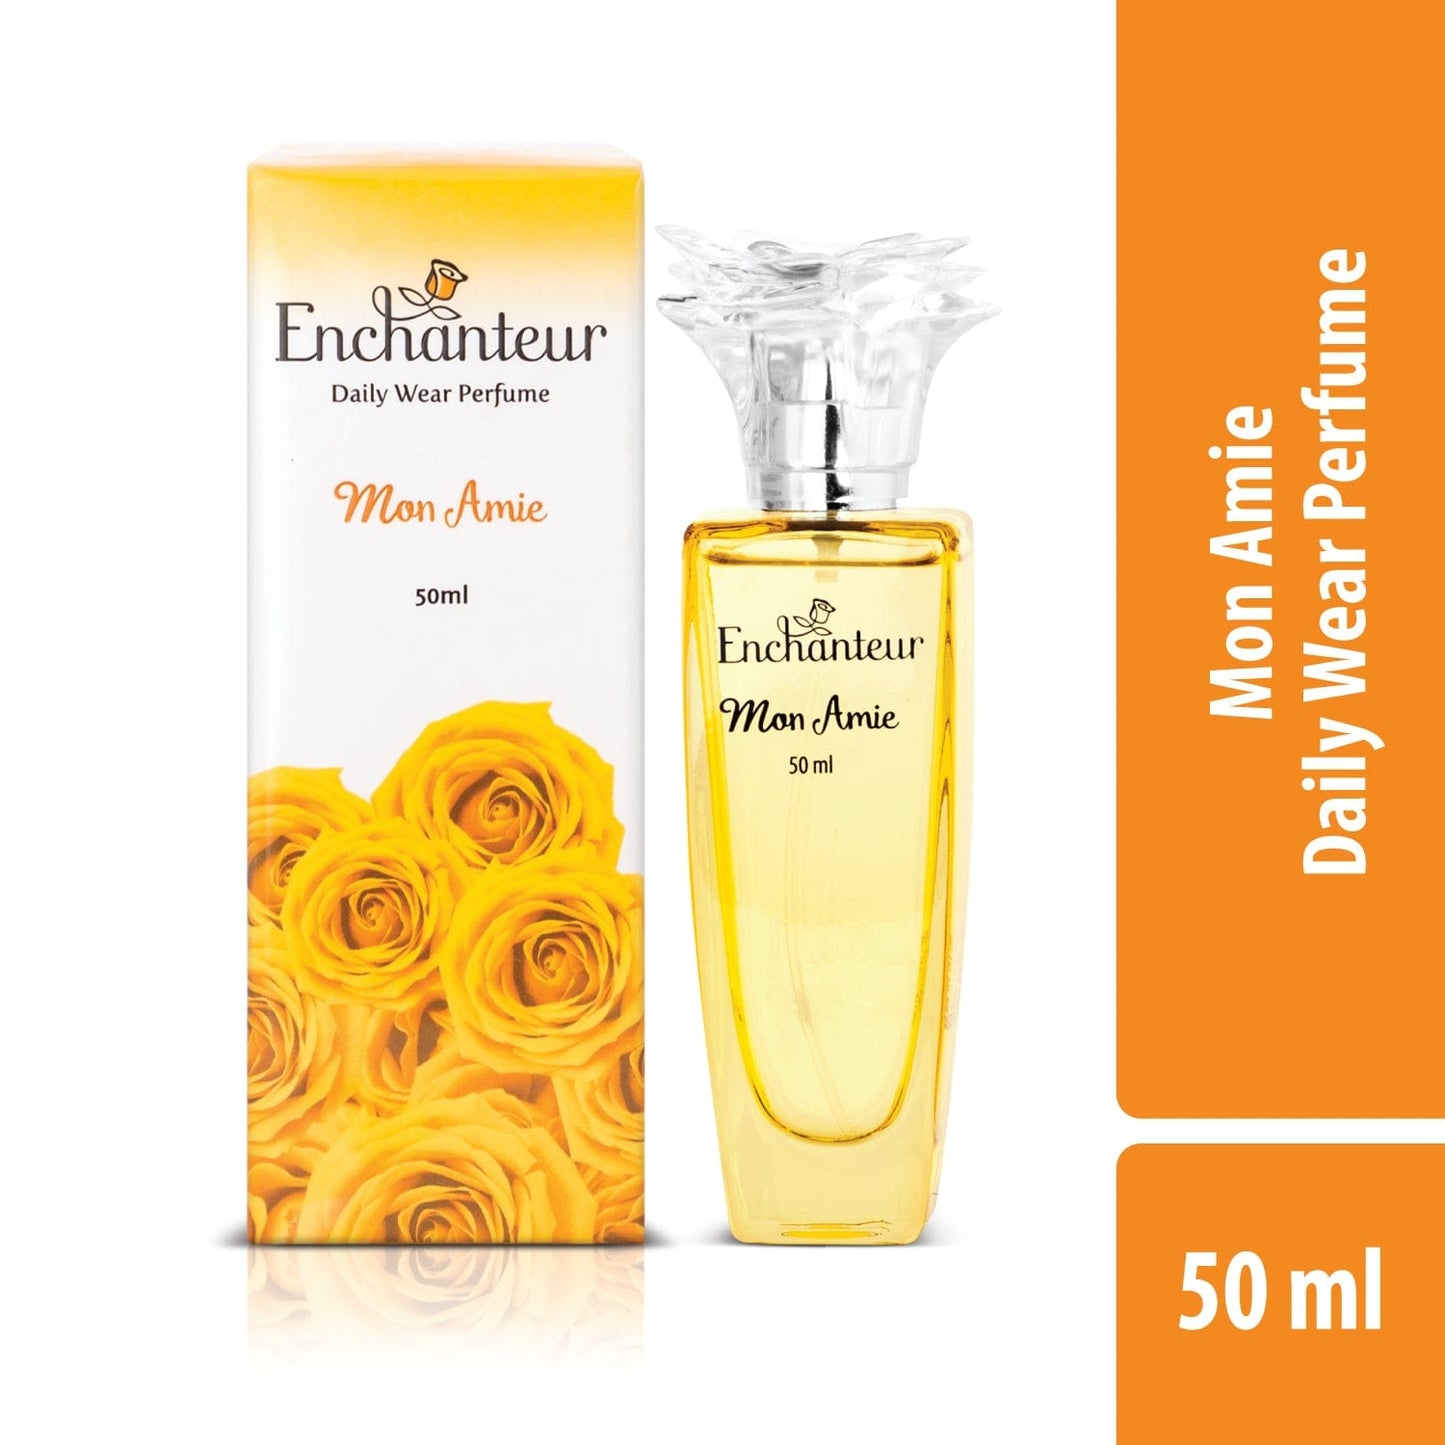 Enchanteur Mon Amie Daily wear Perfume for Women, 50ml